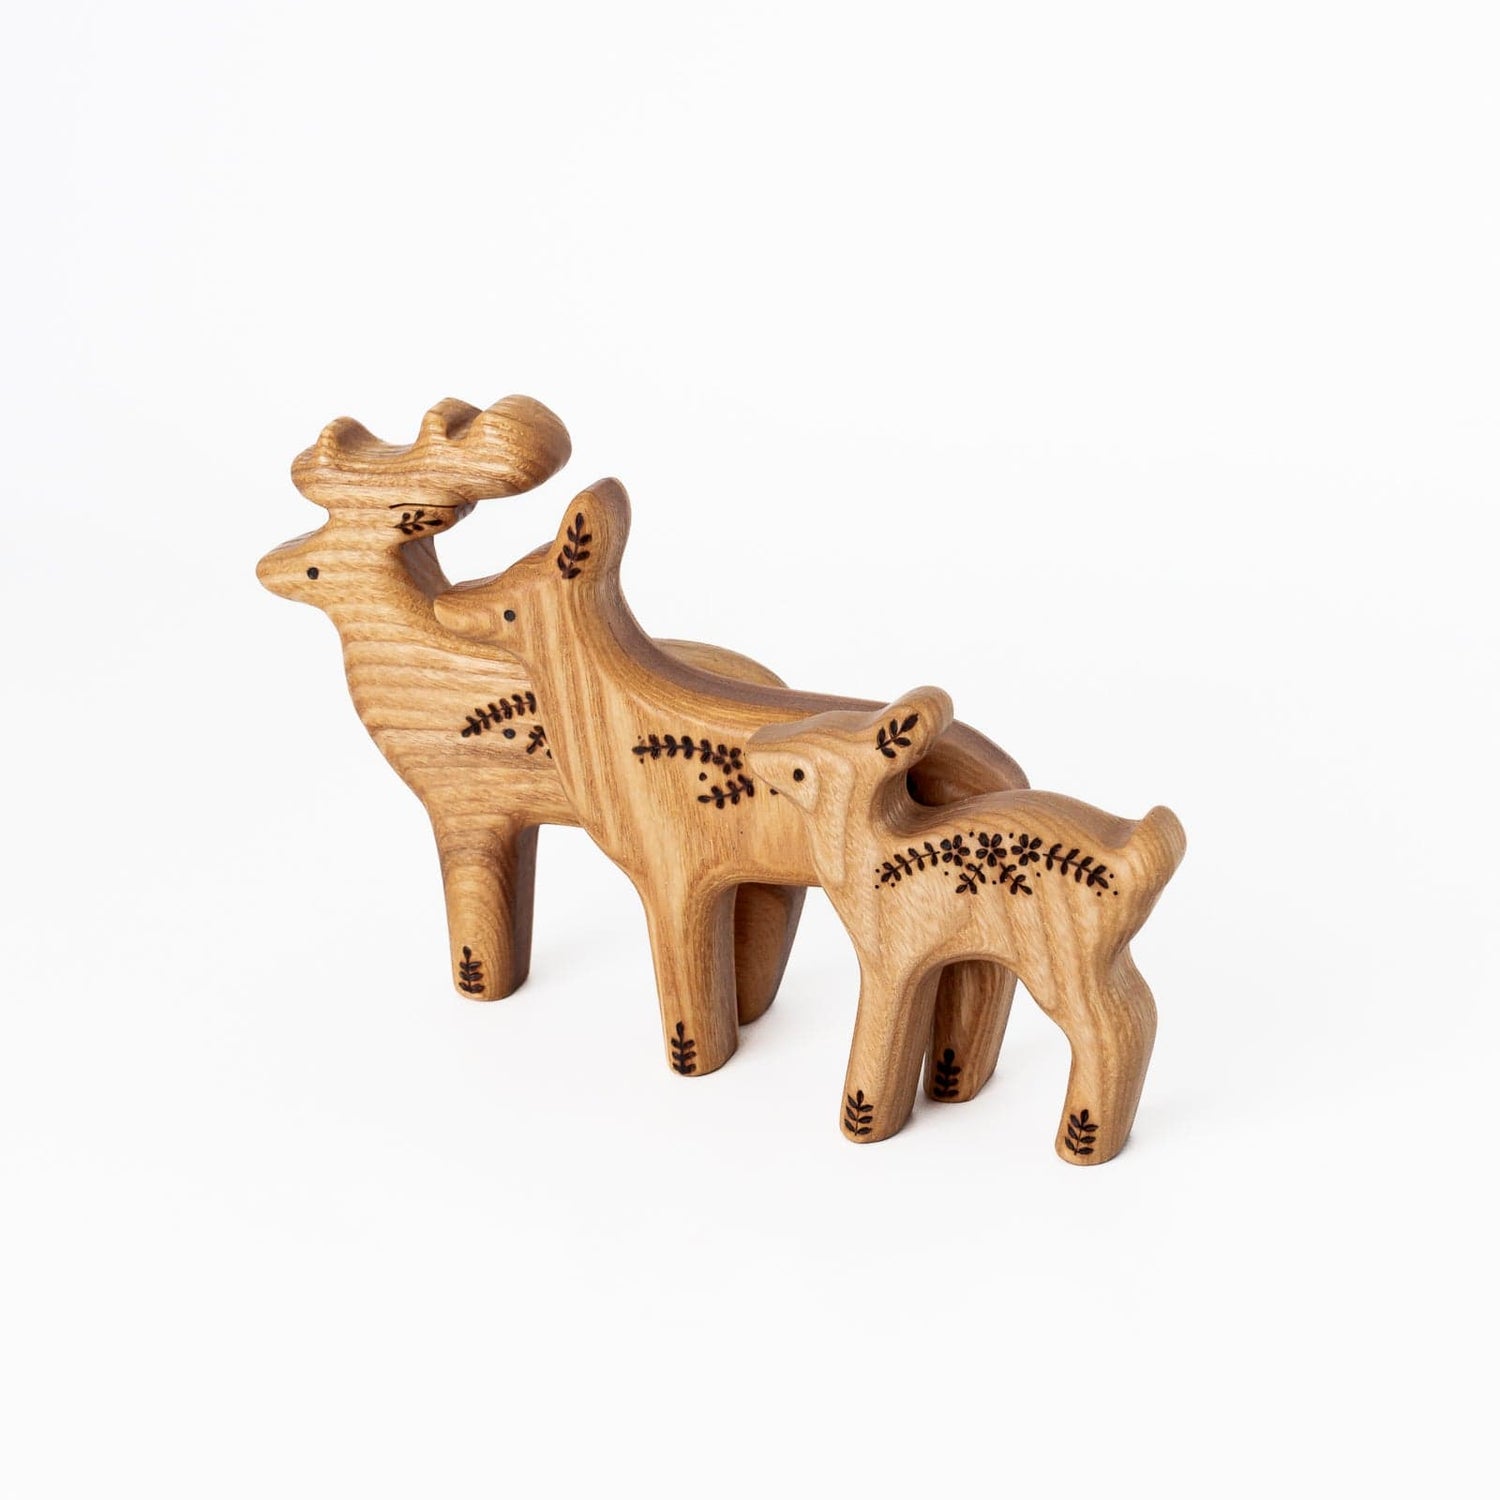 Tiny Fox Hole Wooden Animals Handmade Wooden Deer Toy (Set of 3)